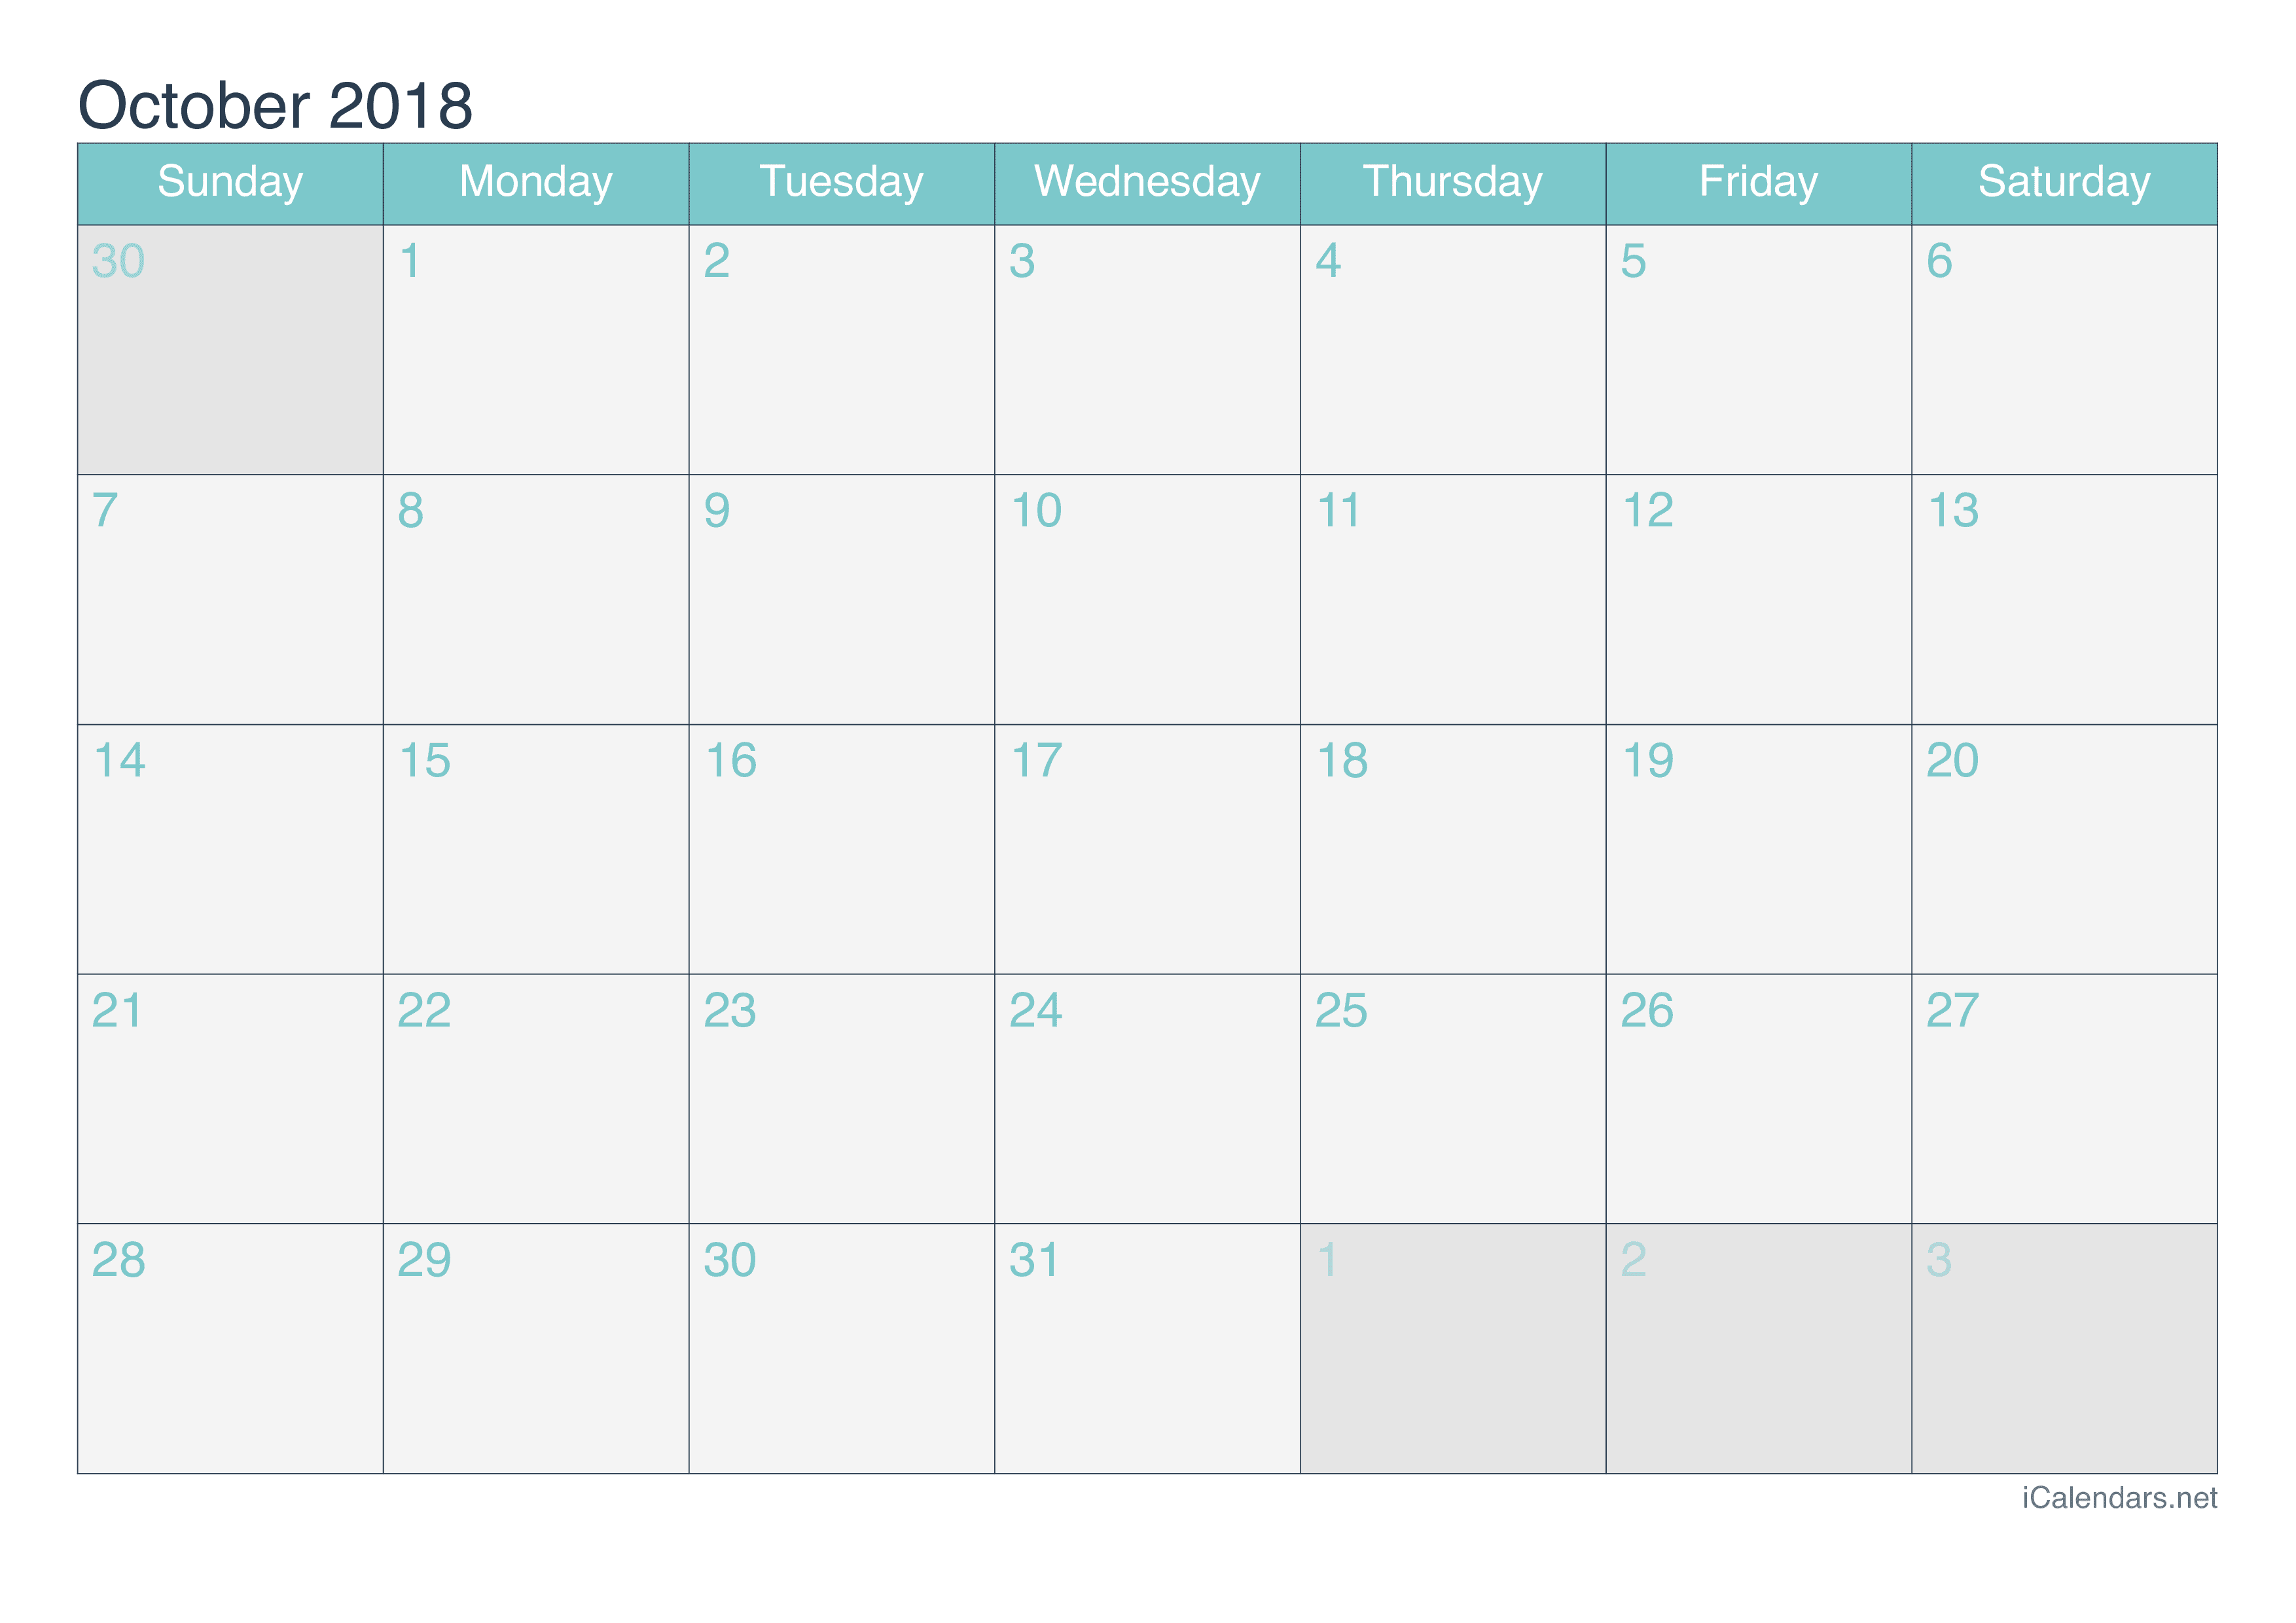 October 2018 Printable Calendar icalendars net